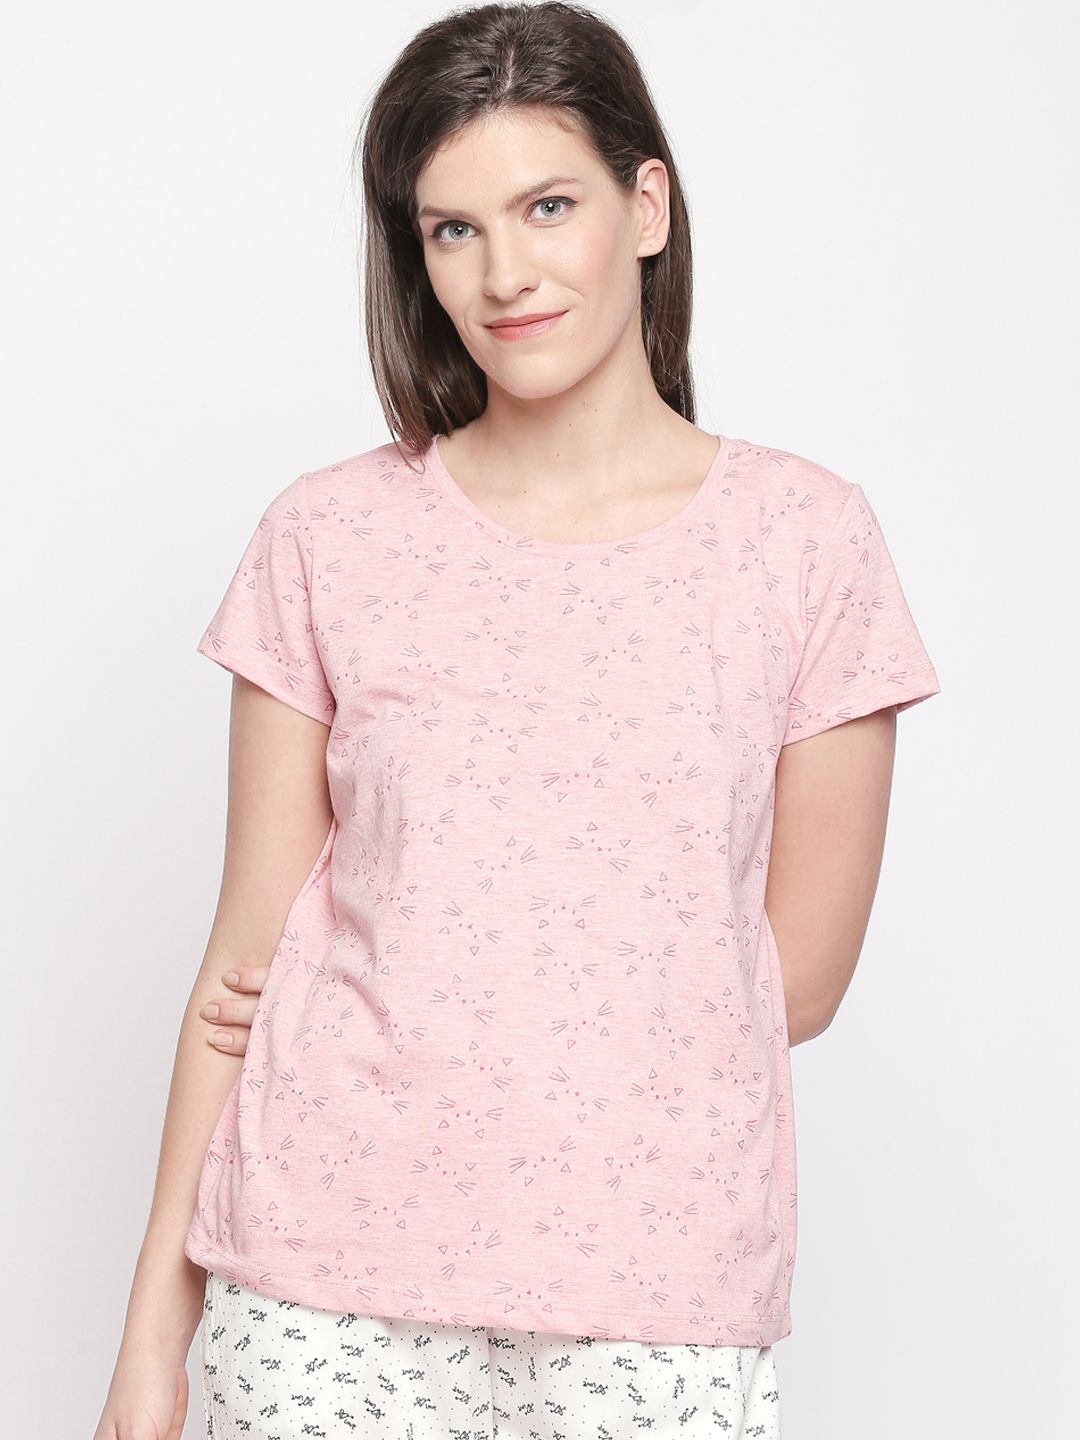 Dreamz by Pantaloons Women Pink Printed Lounge T-Shirt Price in India